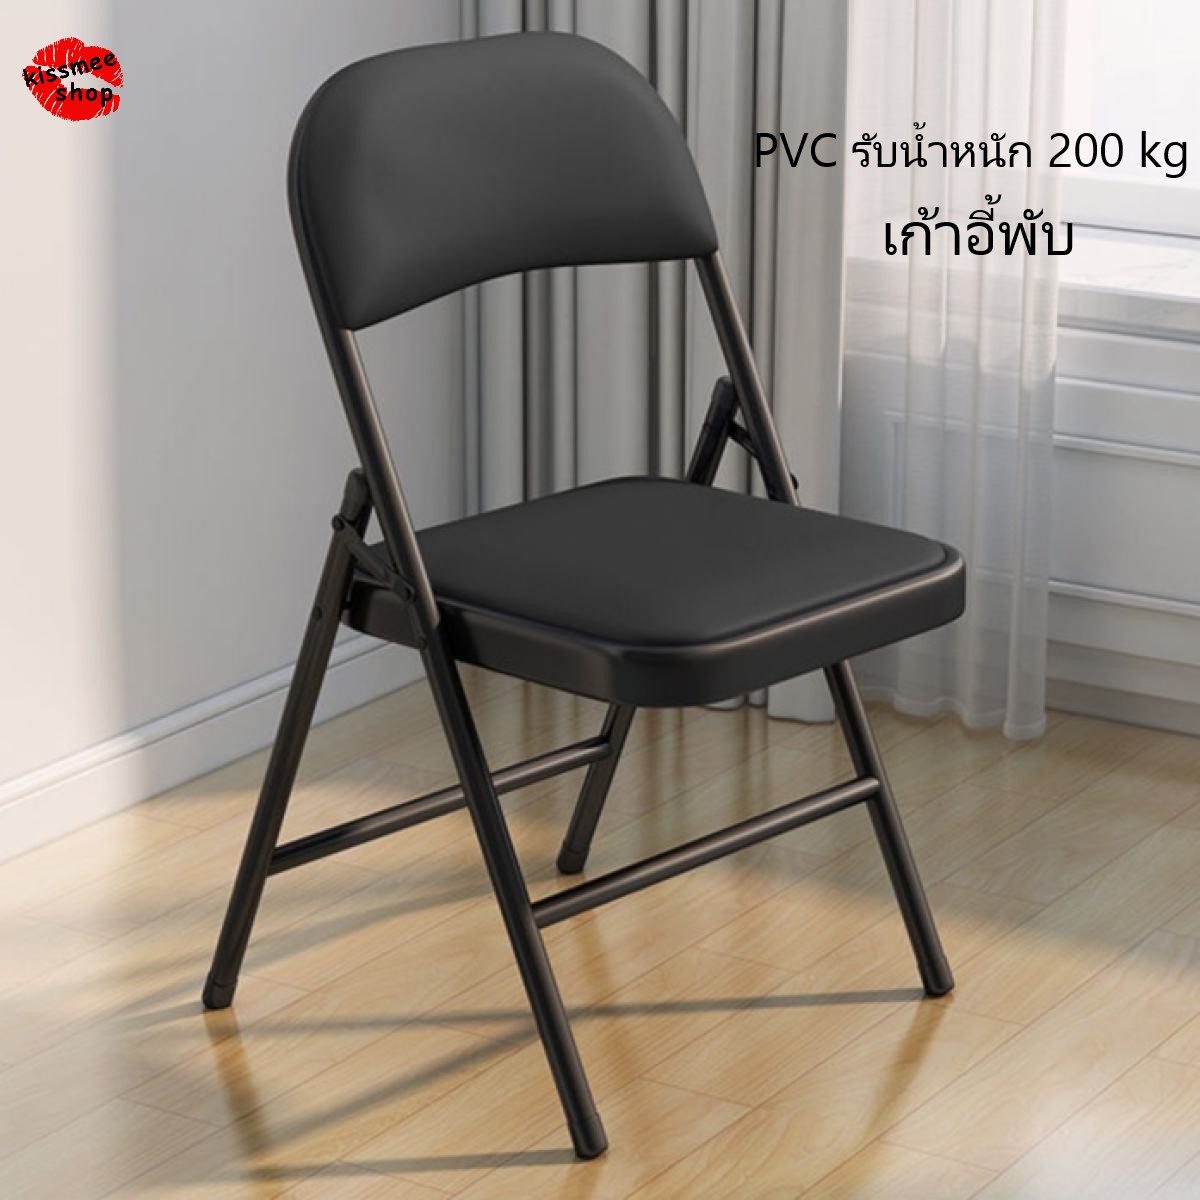 Kissmee เก้าอี้เหล็ก เบาะหนัง  เก้าอี้พับ มีพนักพิง  PVC รับน้ำหนัก 200 kg  เก้าอี้พับ เก้าอี้ เก้าอี้พับได้ เก้าอี้เหล็กพับได้ Folding PVC Seat Steel Chair